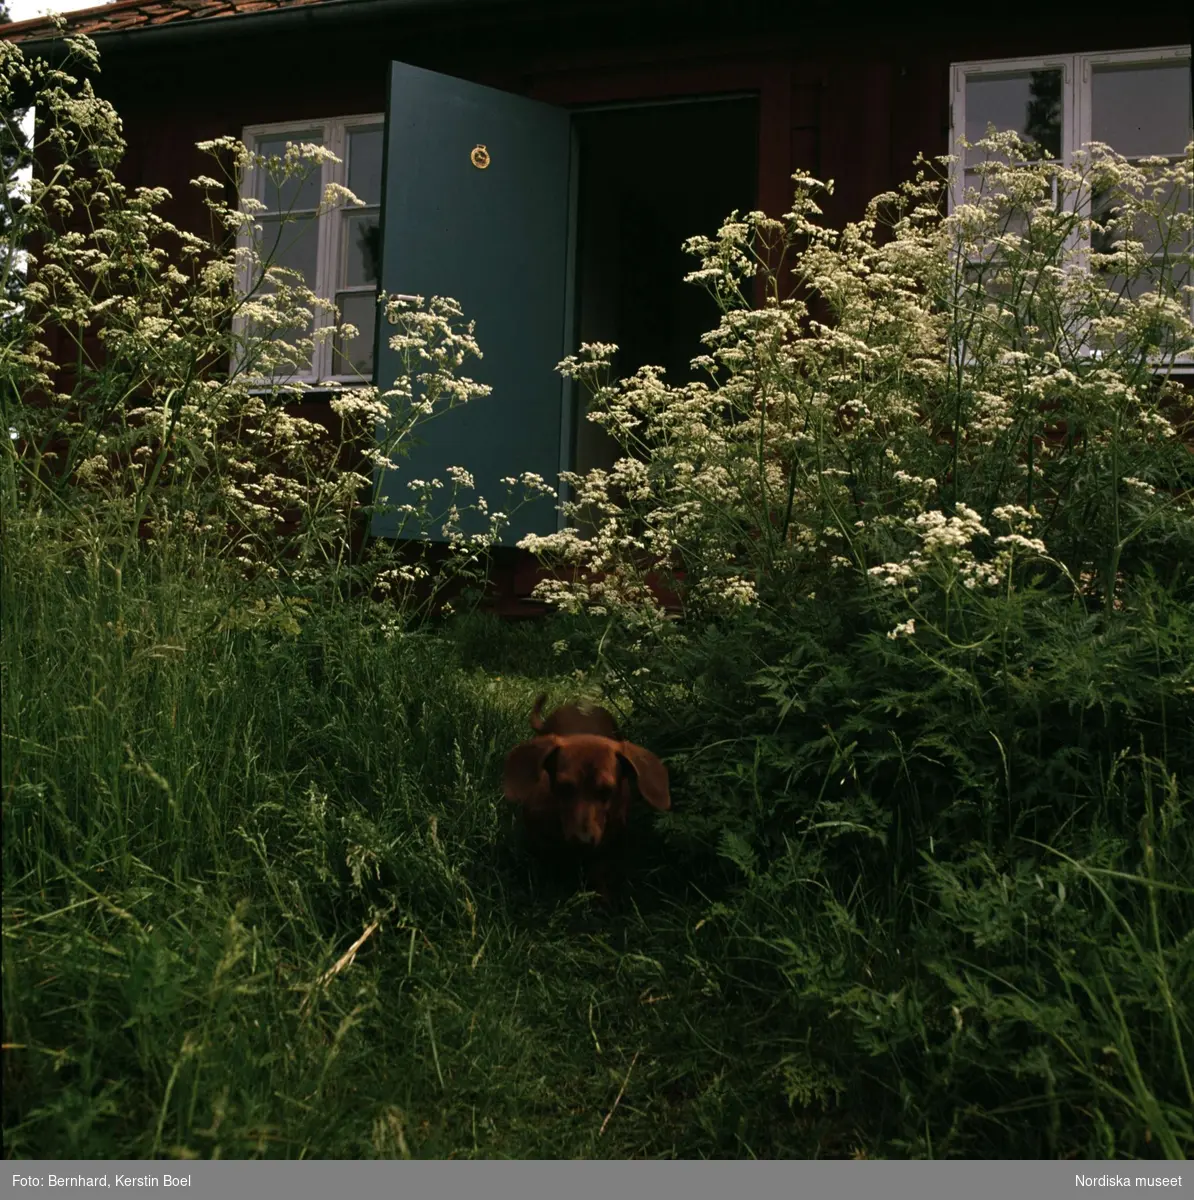 Fotografen Kerstin Bernhards hund i trädgården.